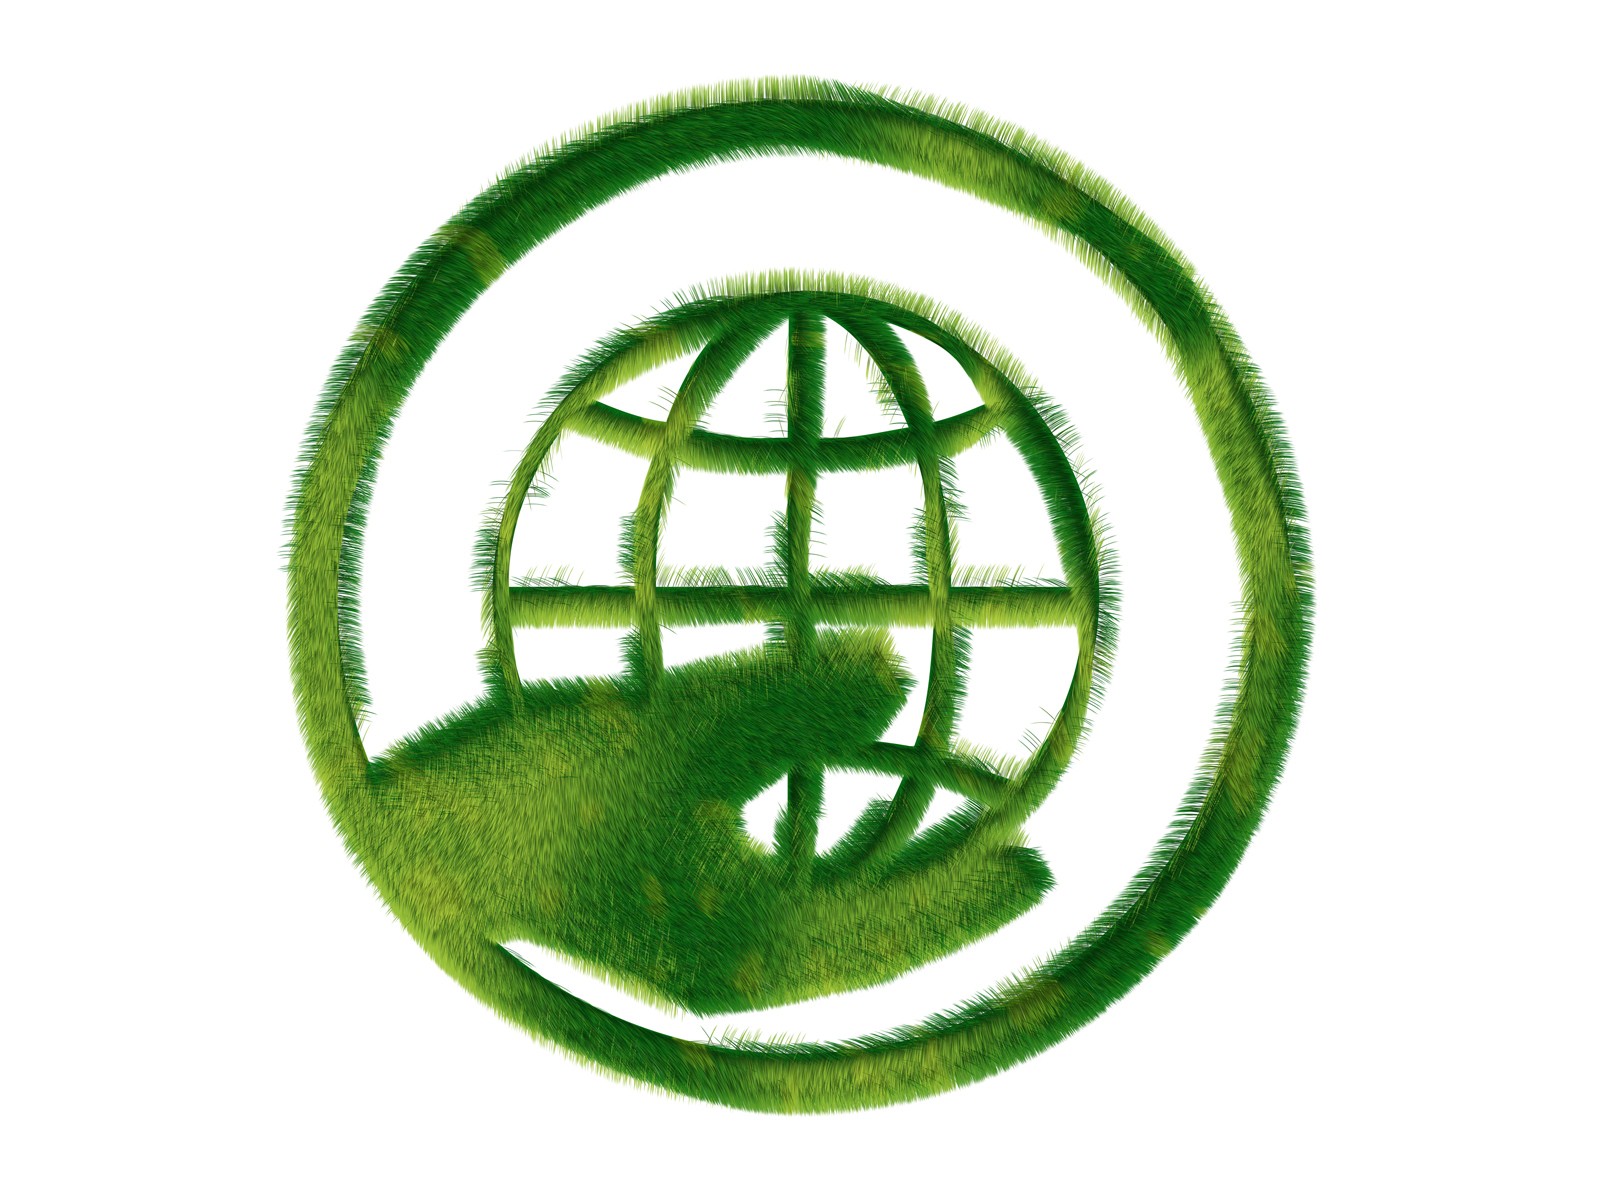 Eco Friendly Symbols - Recycle symbols and Environmental Green